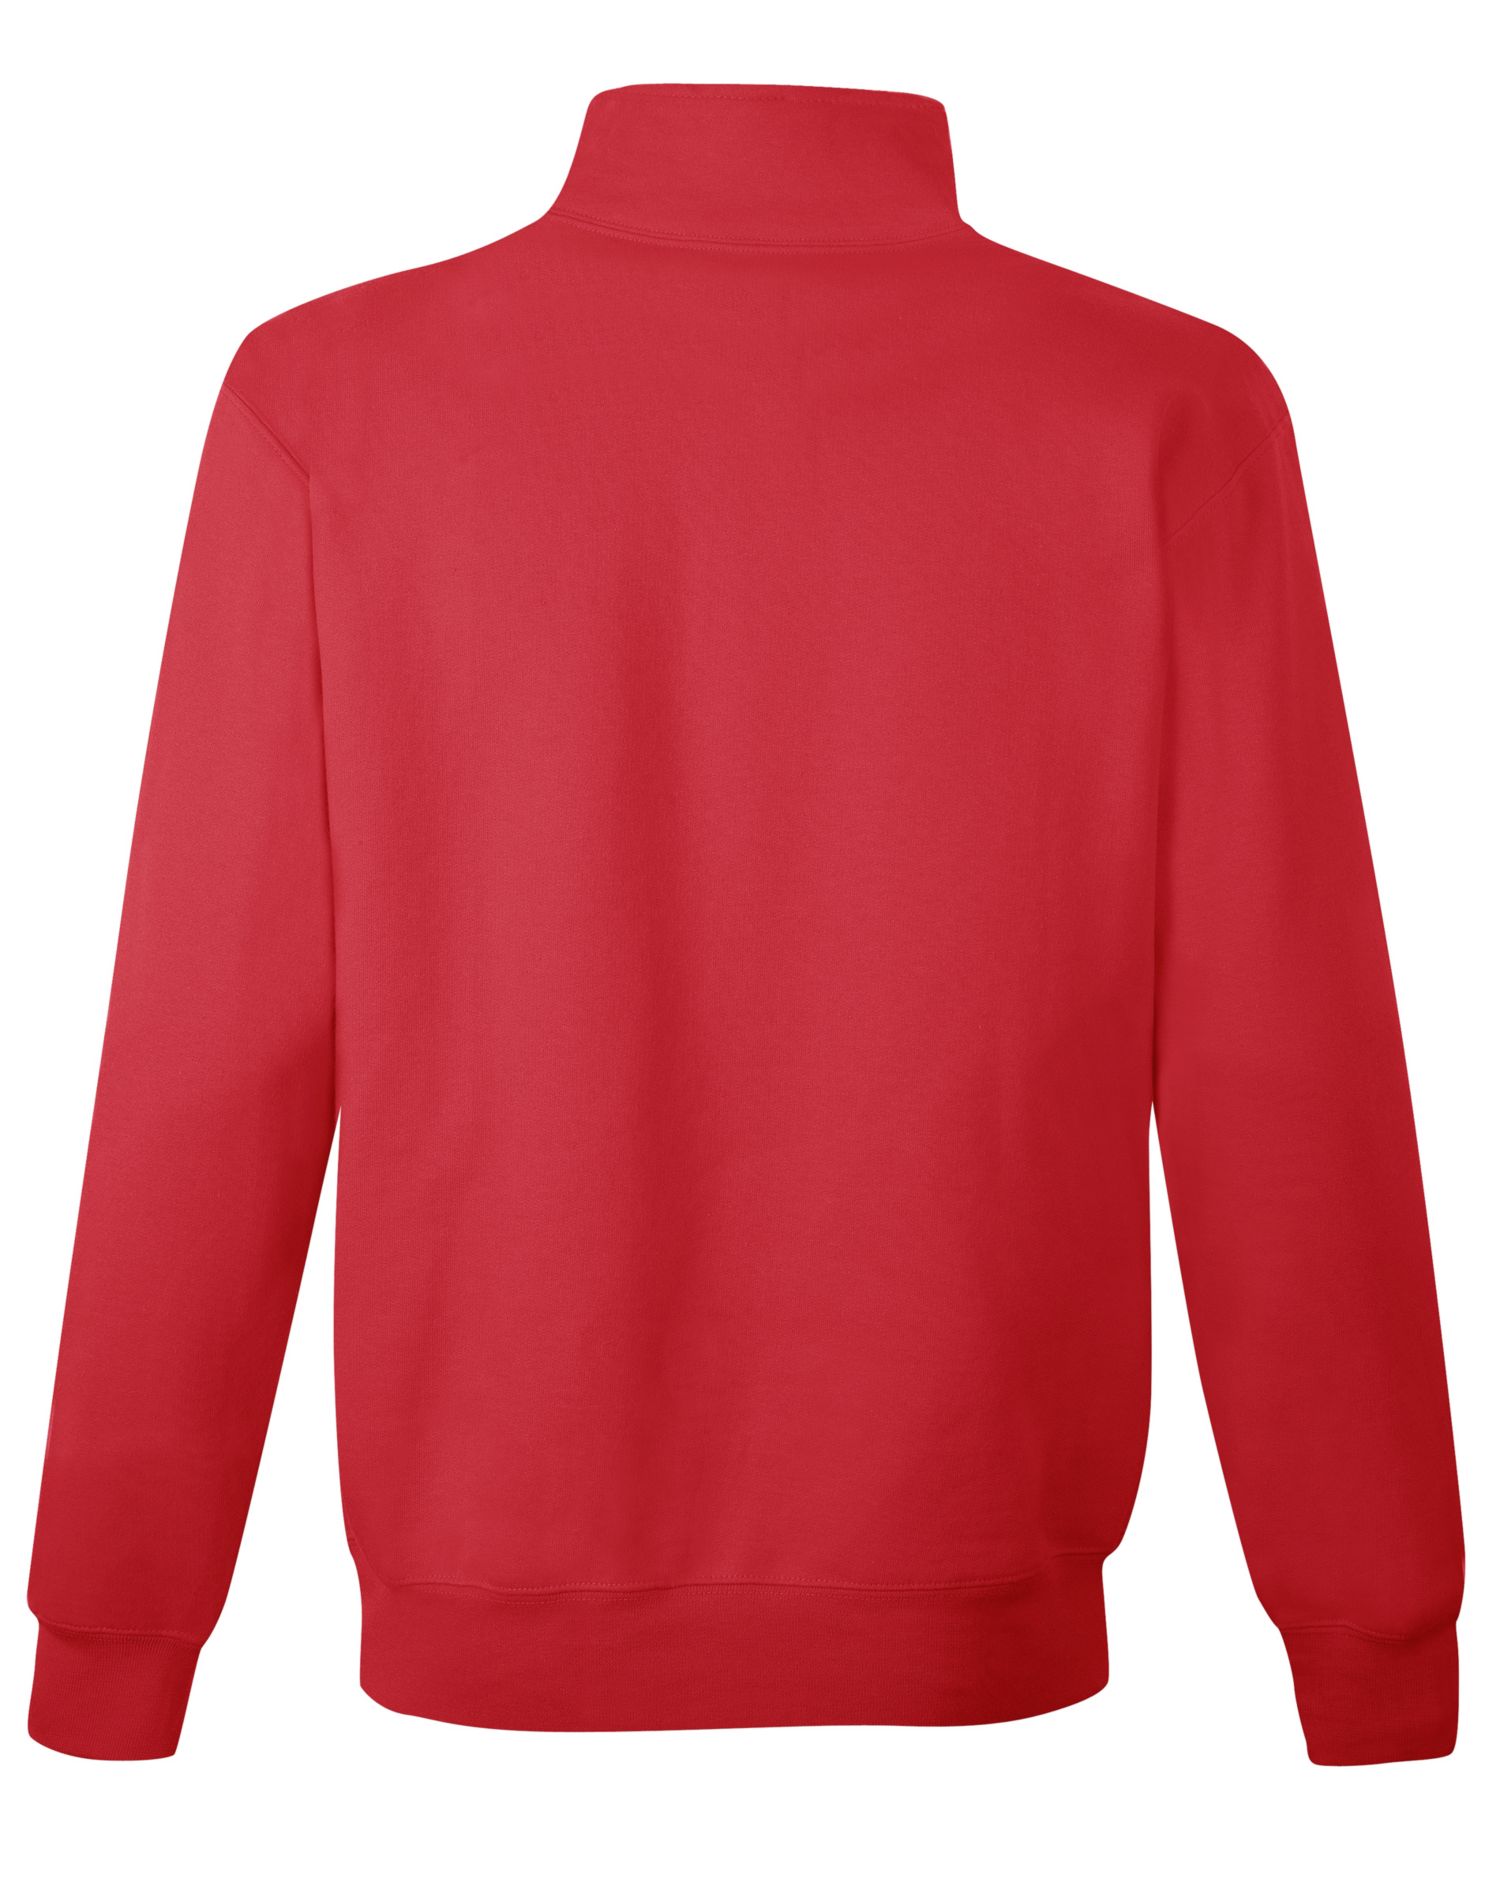 Men's Nano Premium Soft Lightweight Fleece Jacket - image 2 of 2